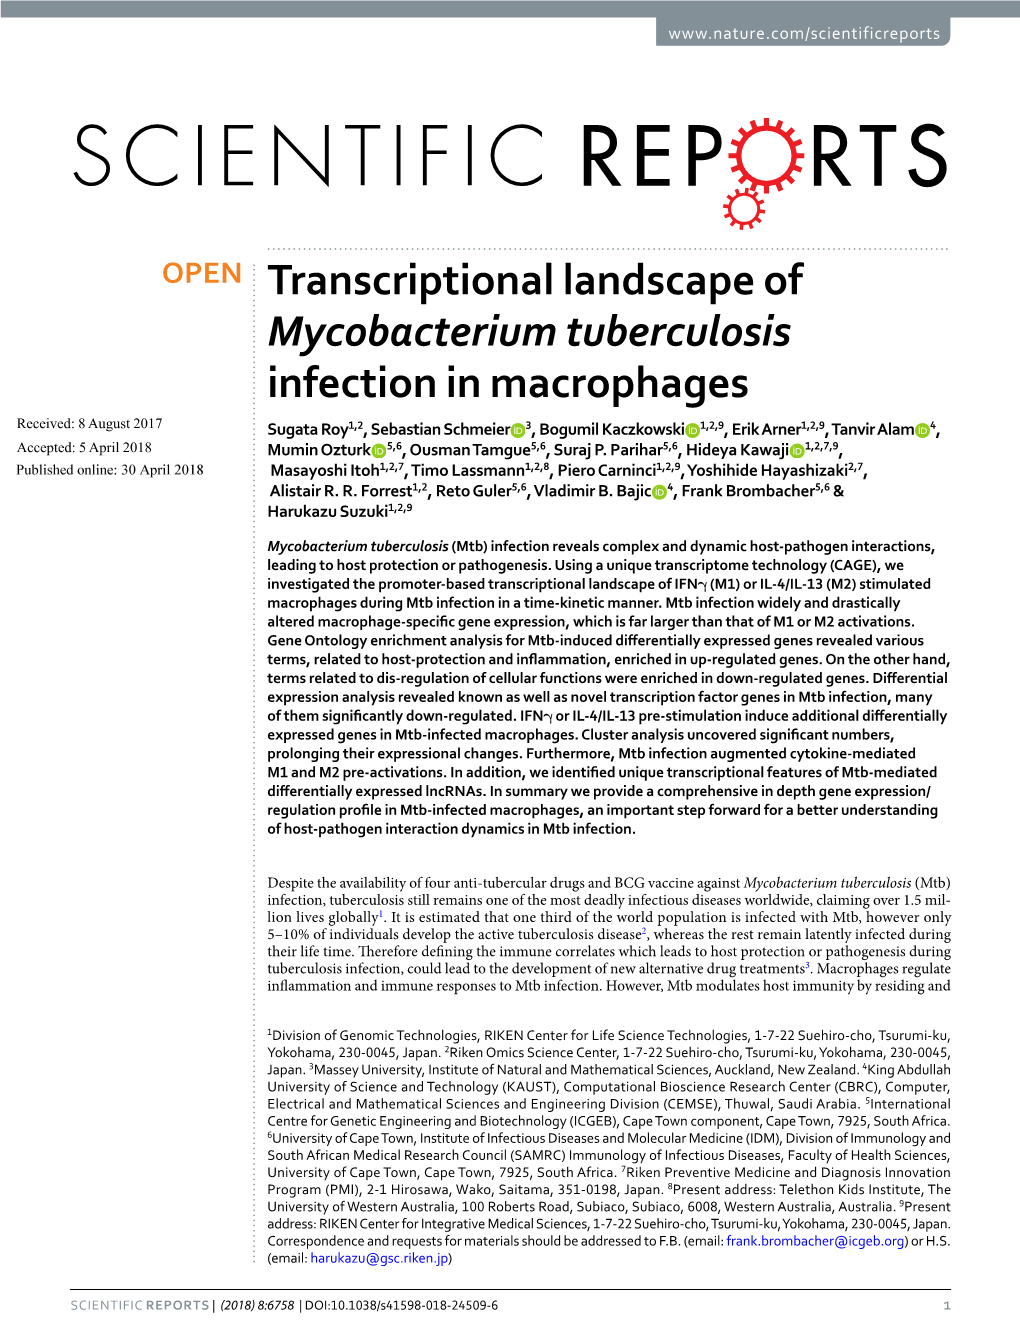 Transcriptional Landscape of Mycobacterium Tuberculosis